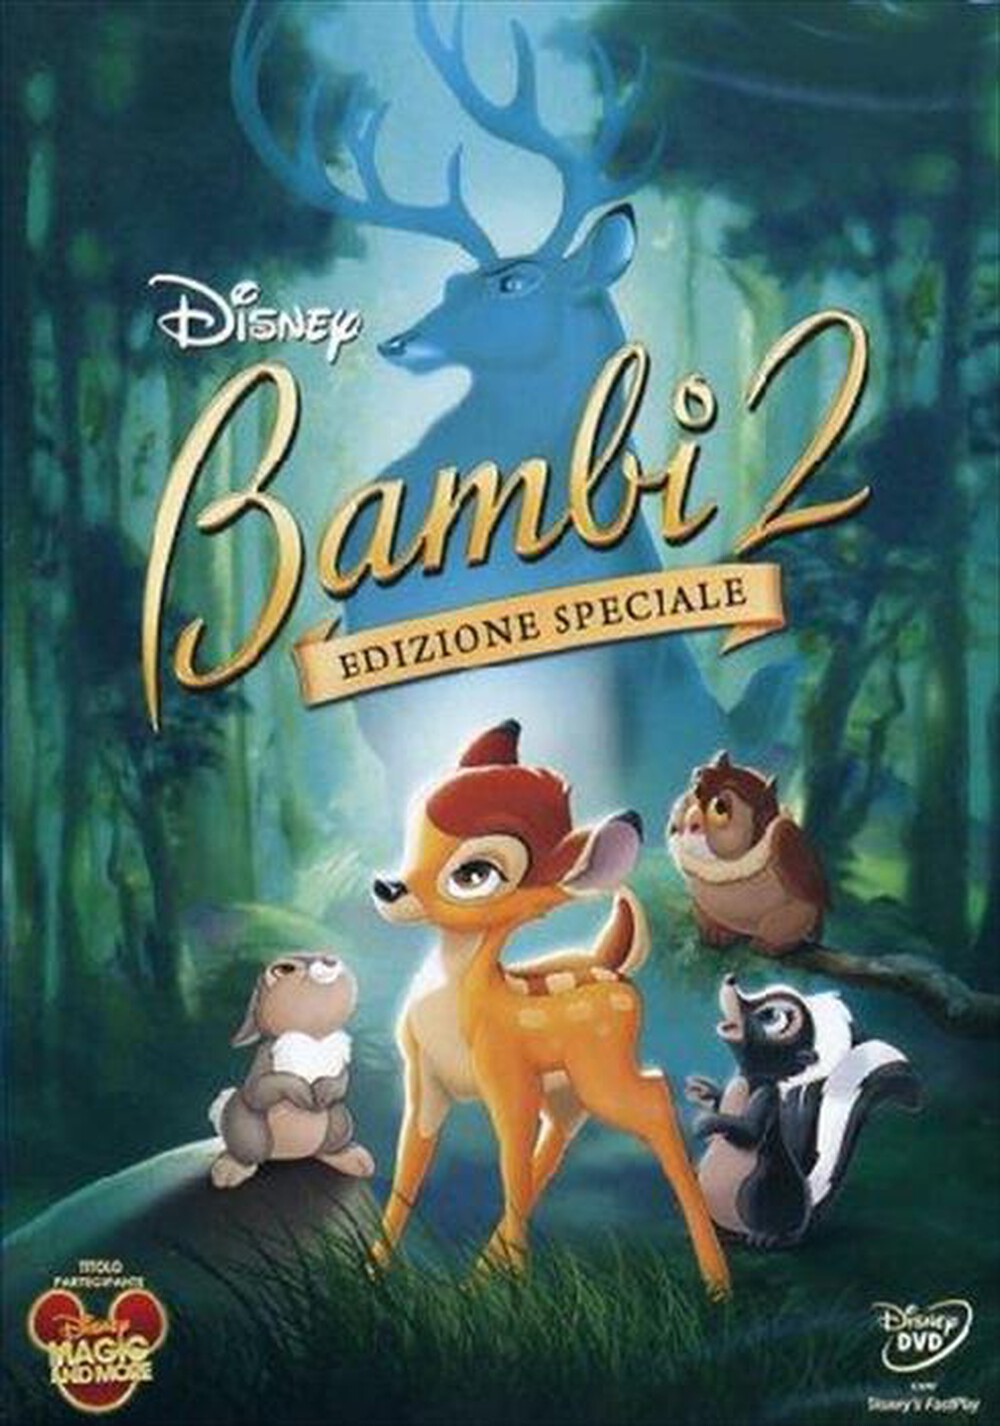 "WALT DISNEY - Bambi 2 - "